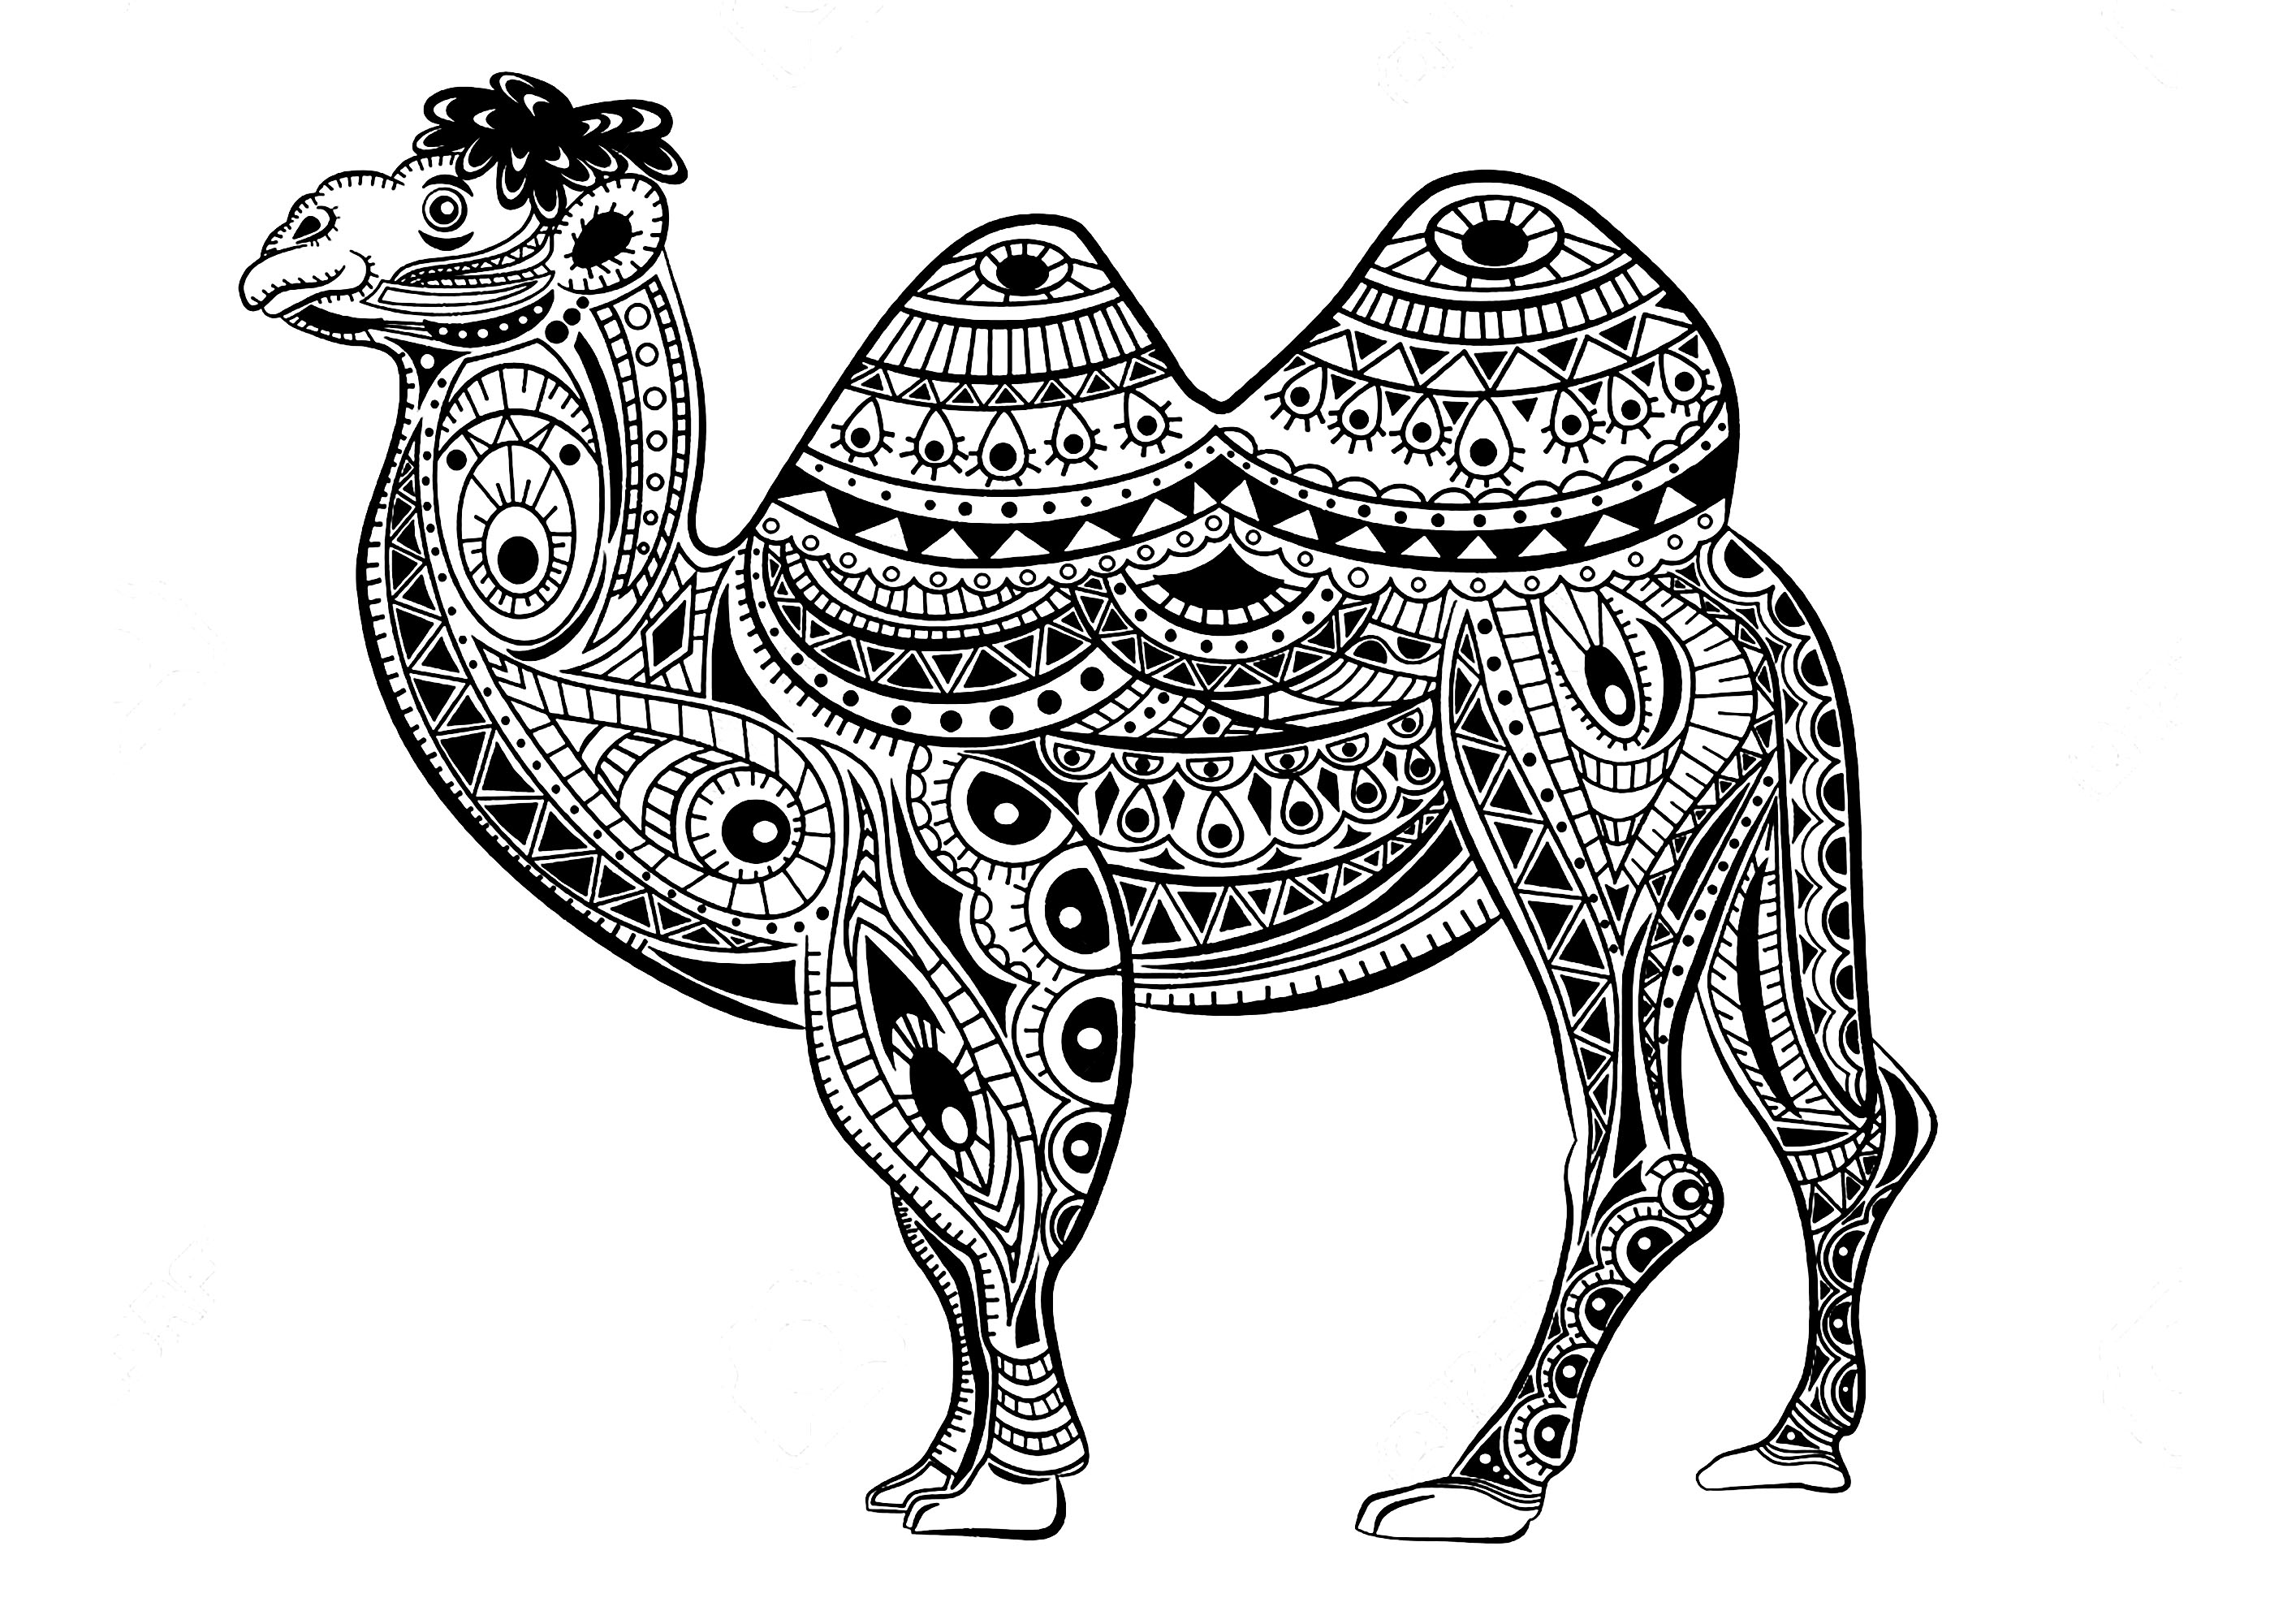 Bonito camelo cujo corpo é feito de padrões Zentangle, Artista : Vita Kosova   Fonte : 123rf